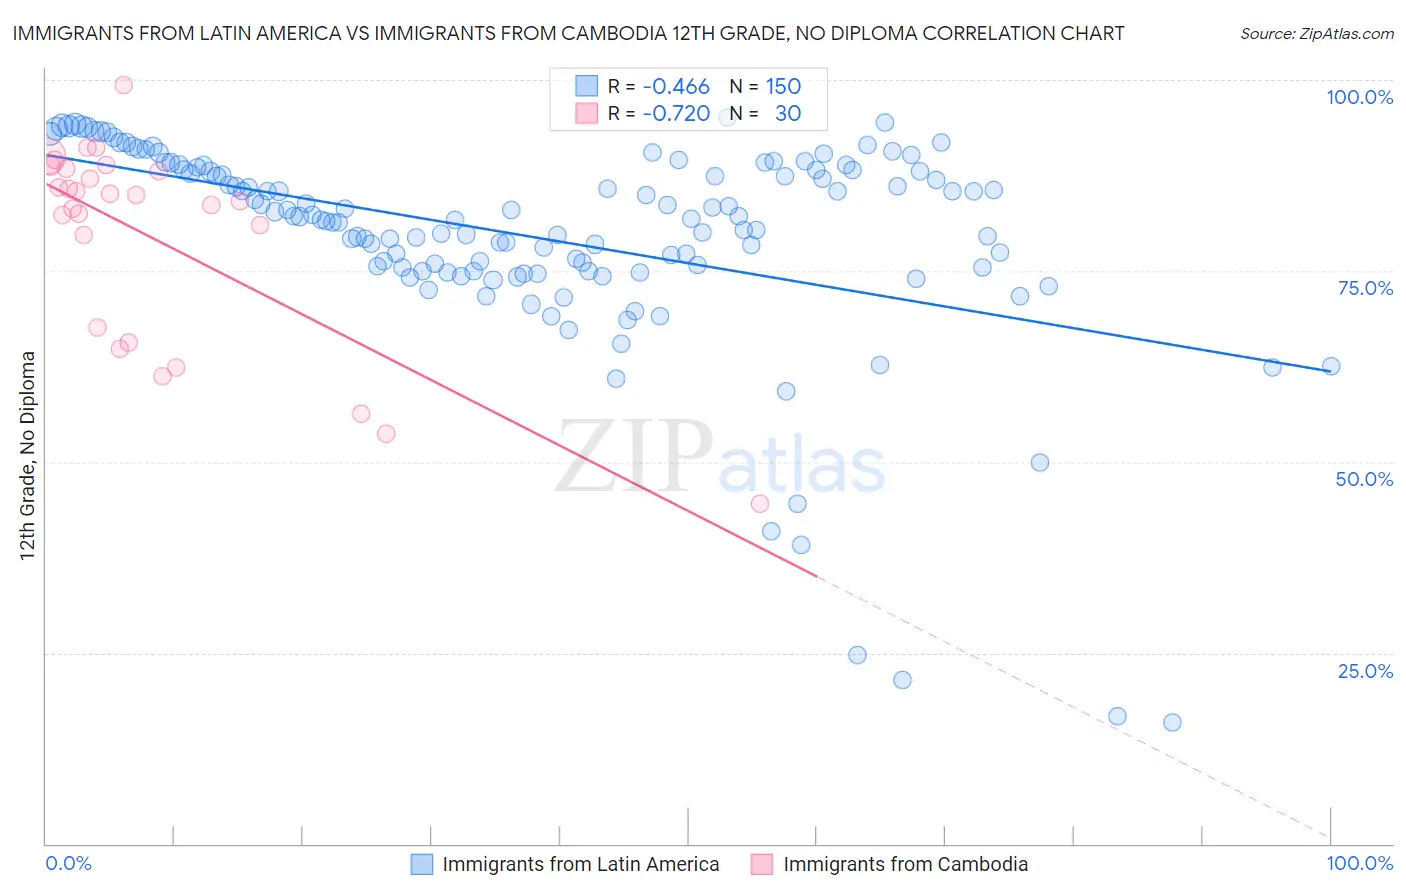 Immigrants from Latin America vs Immigrants from Cambodia 12th Grade, No Diploma